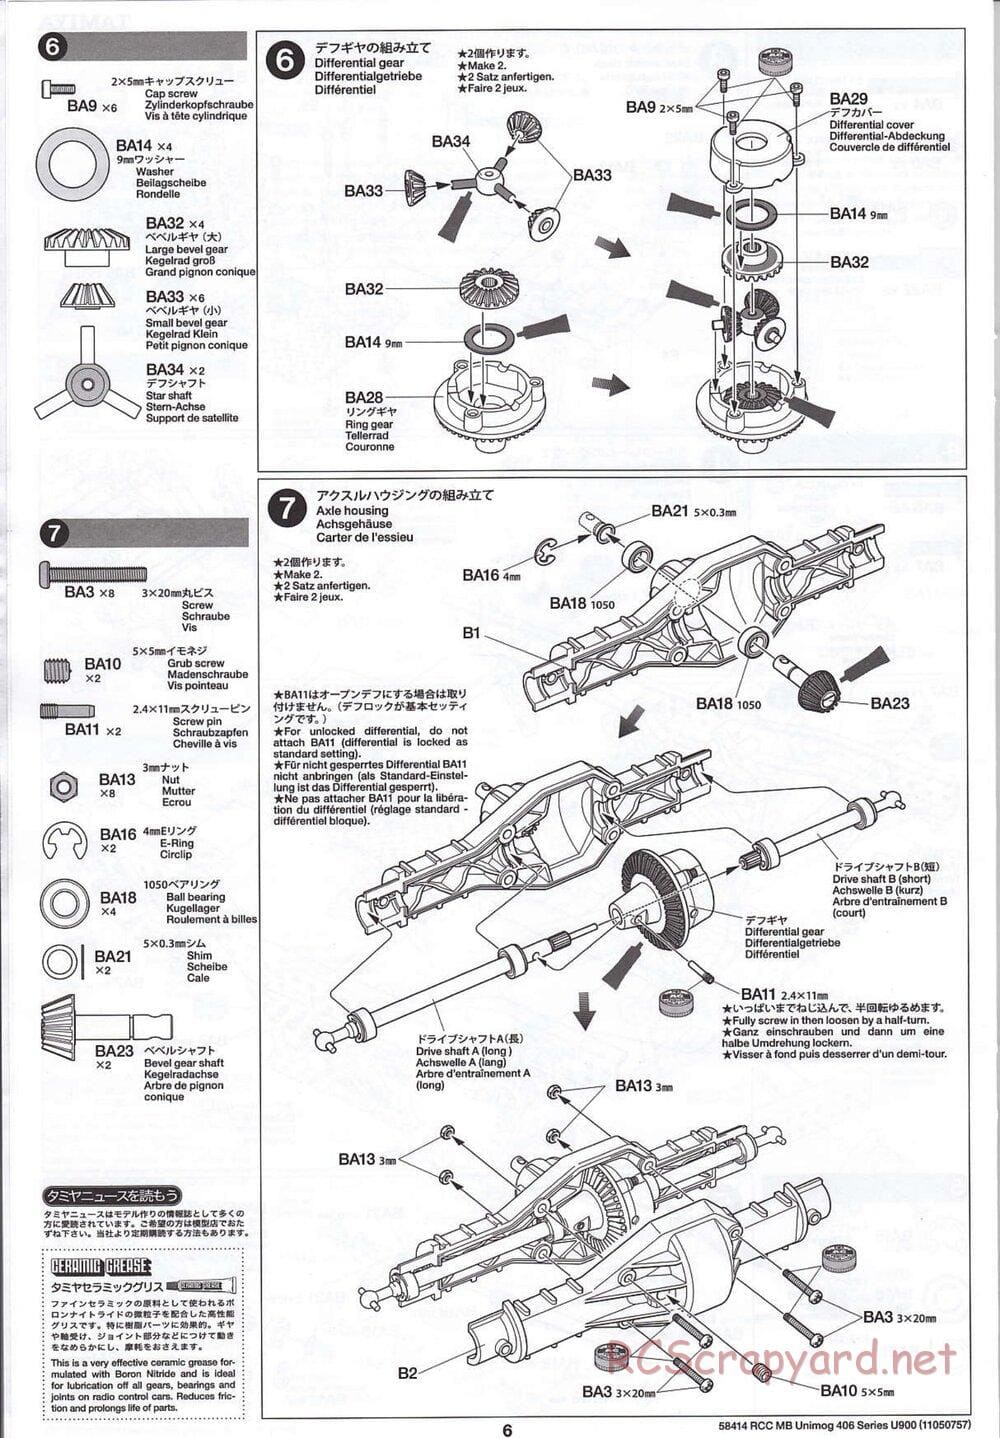 Tamiya - Mercedes-Benz Unimog 406 Series U900 - CR-01 Chassis - Manual - Page 6